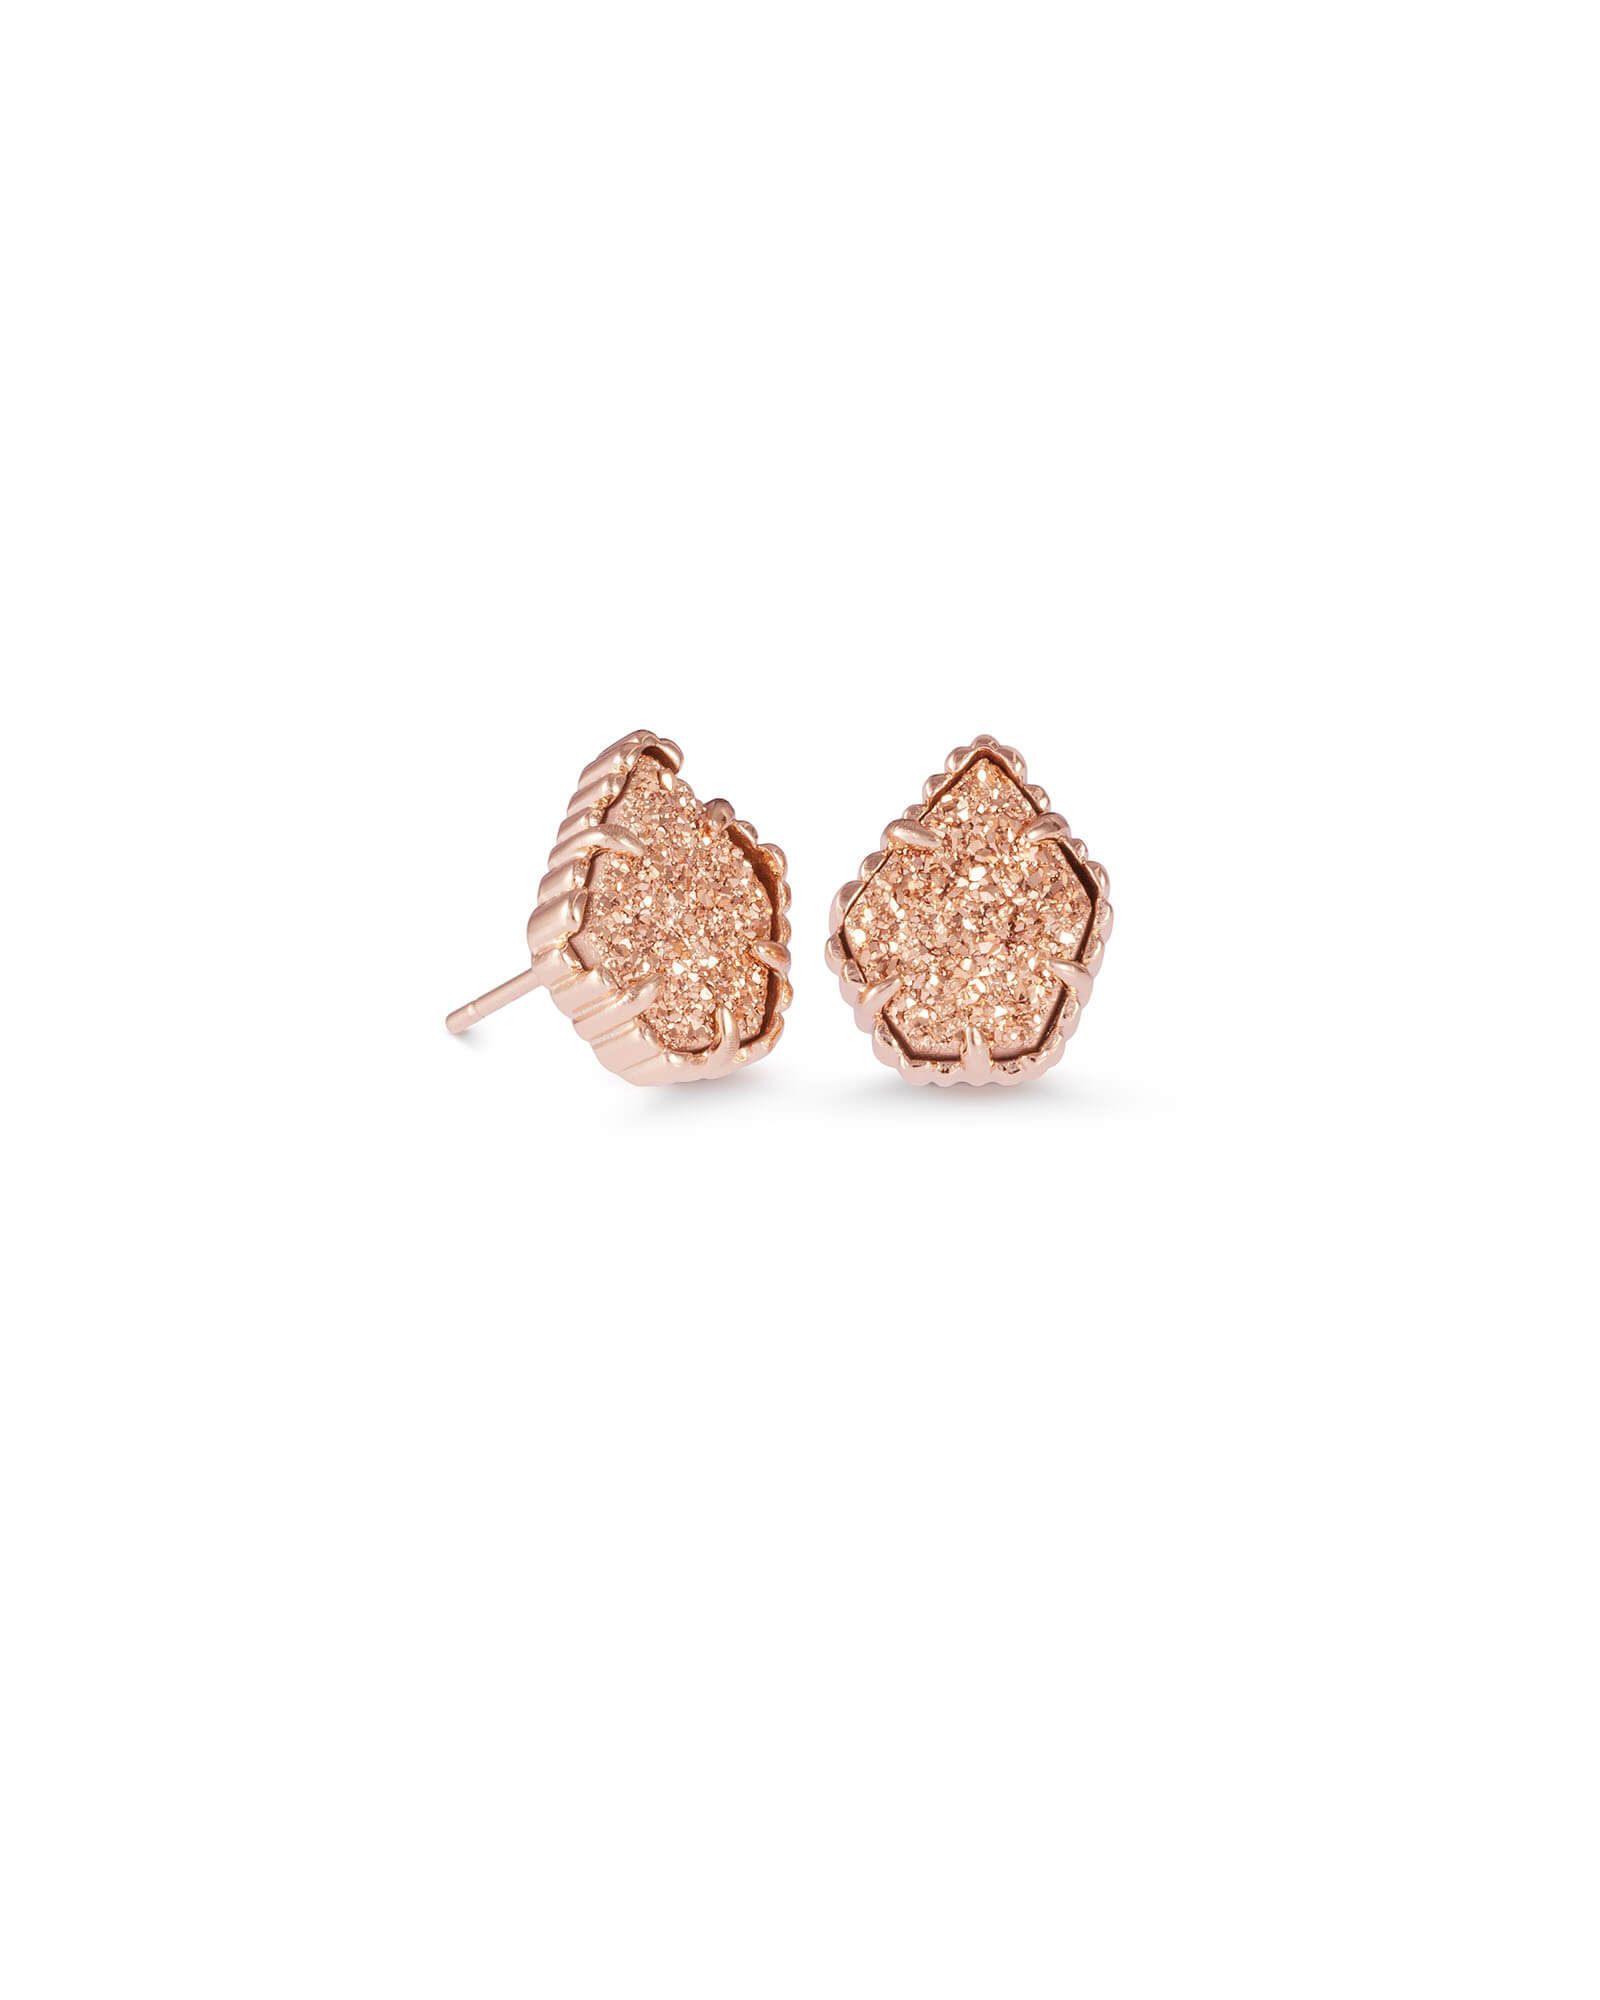 Tessa Rose Gold Stud Earrings in Rose Gold Drusy | Kendra Scott